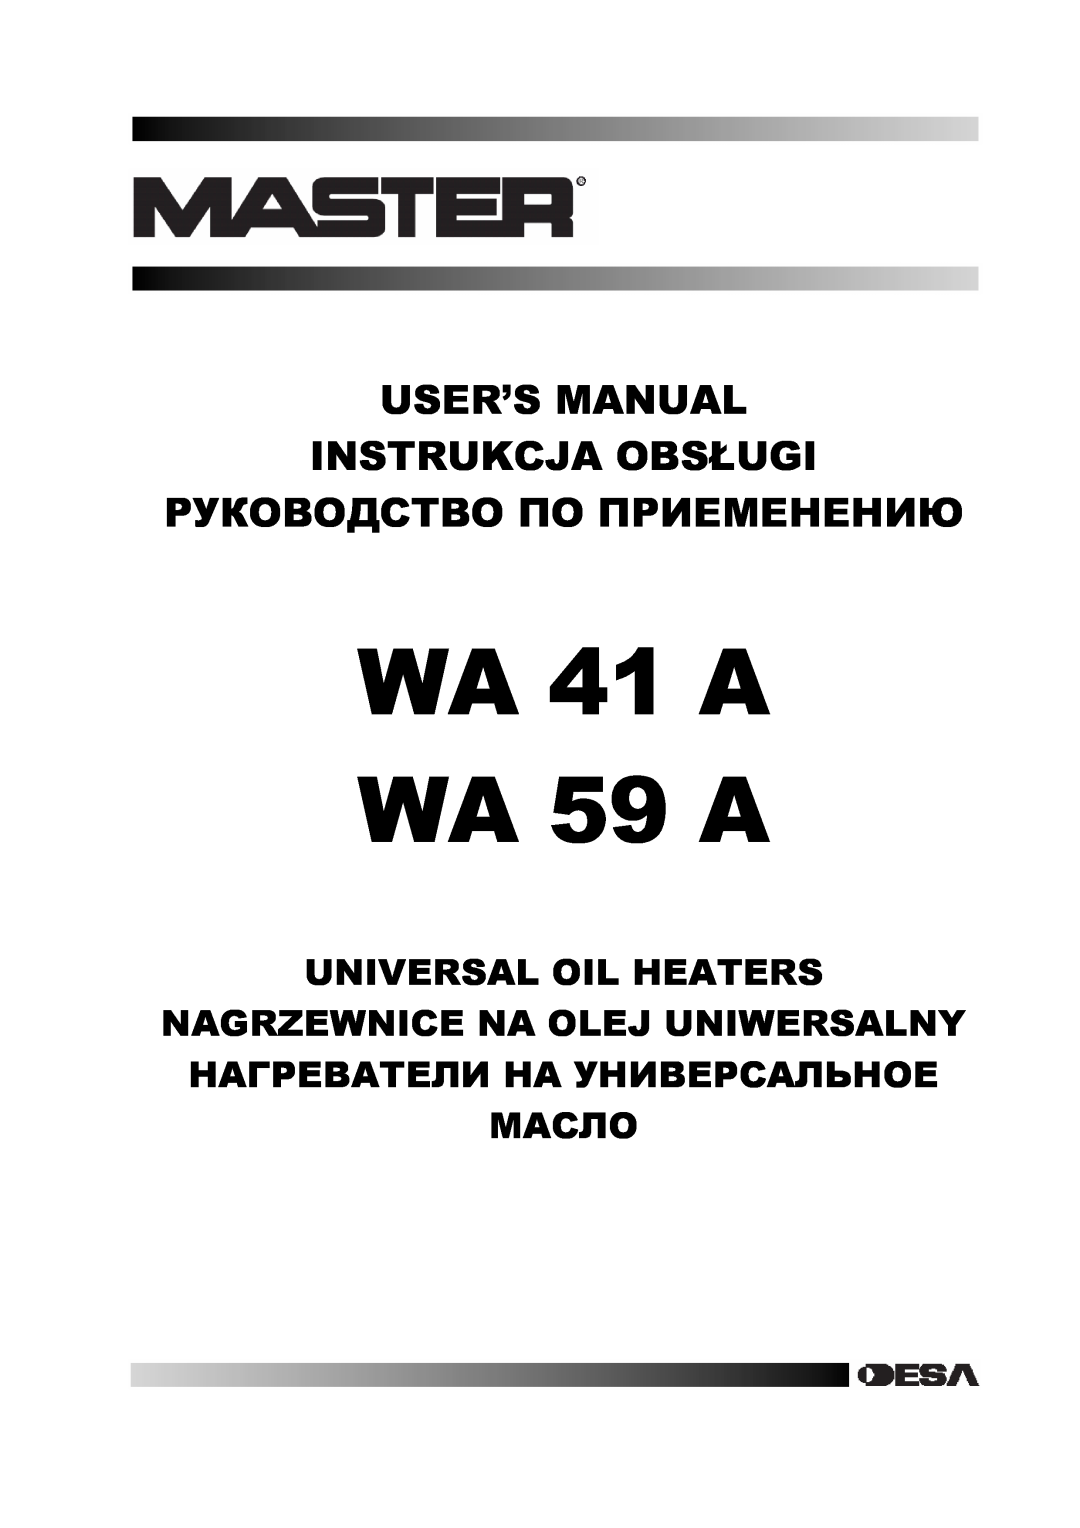 Master Lock user manual WA 41 A WA 59 A, Руководство По Приеменению, Universal Oil Heaters 